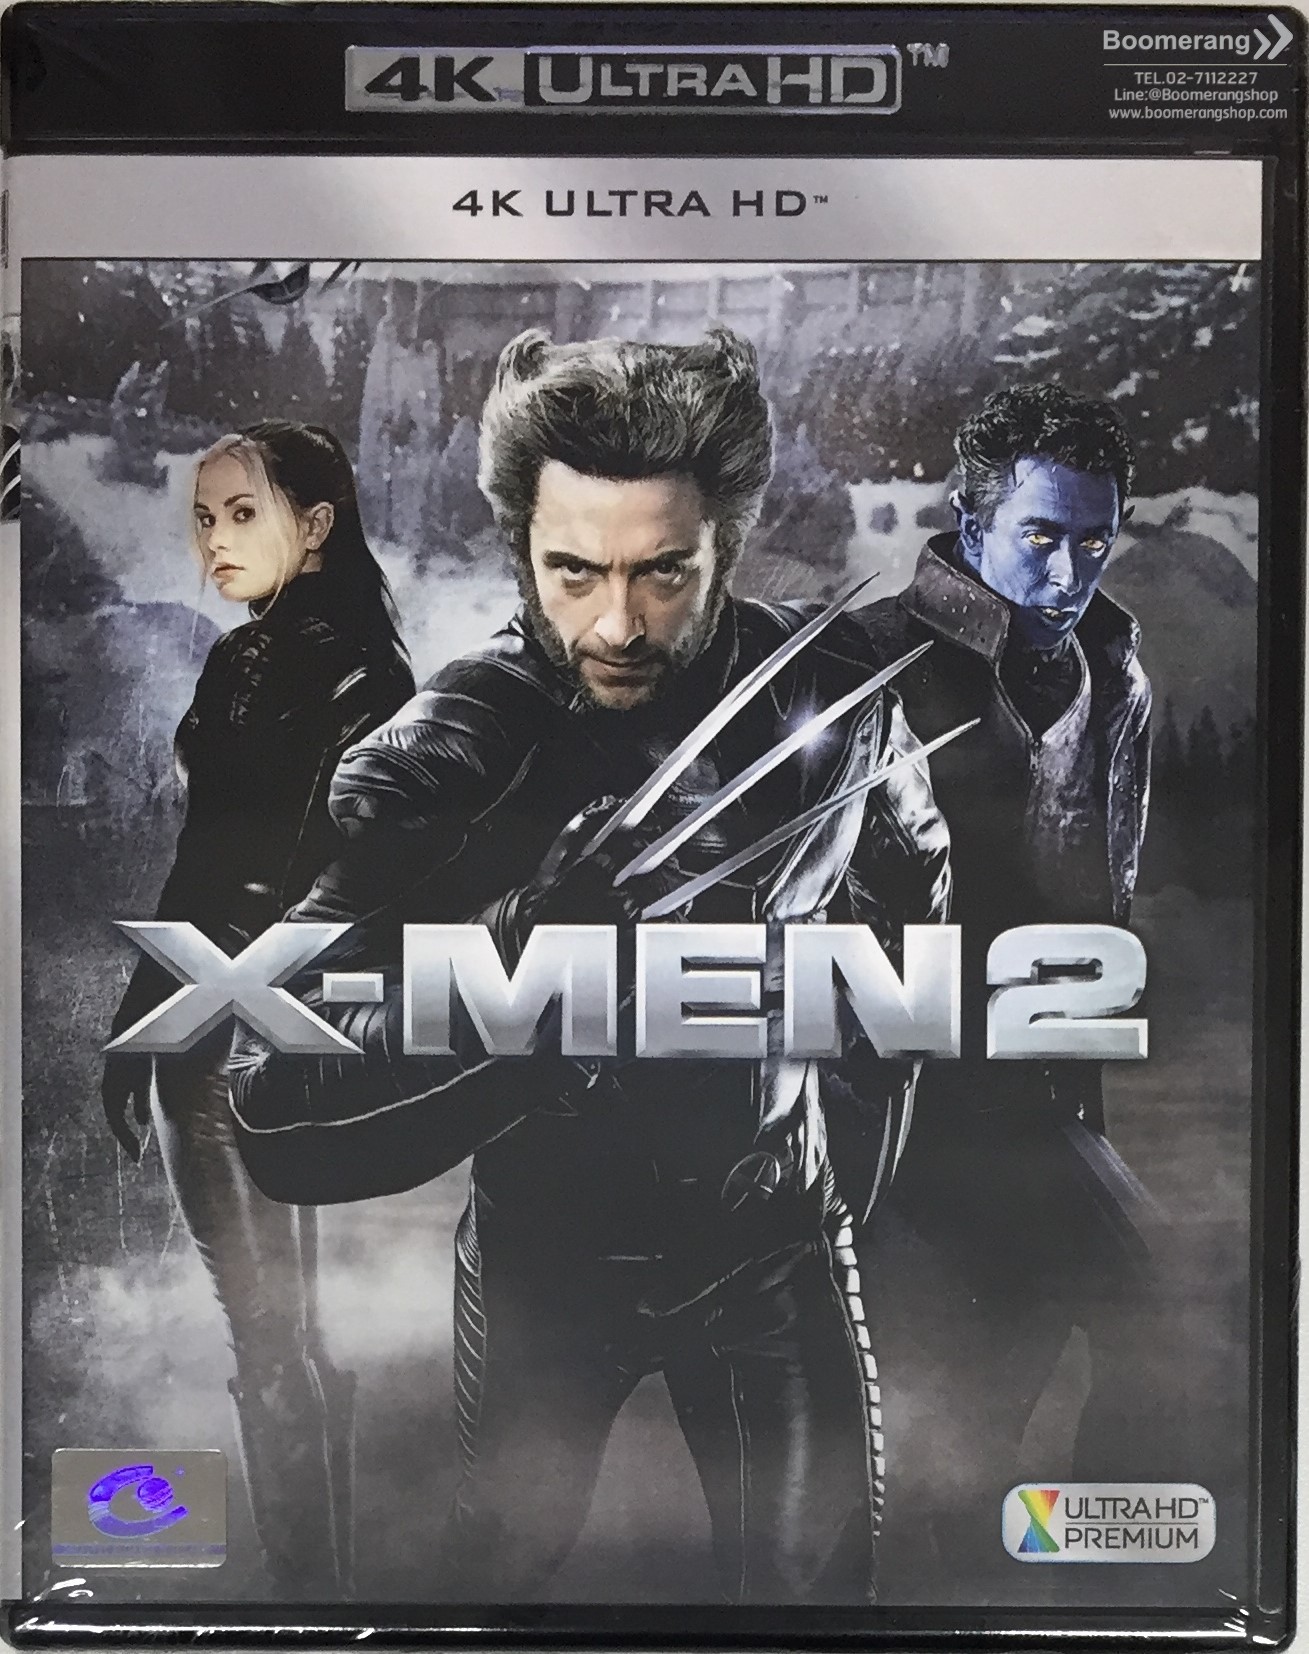 X-Men 2/X-เม็น 2 (4K Ultra HD) | BoomerangShop.com - Thailand 